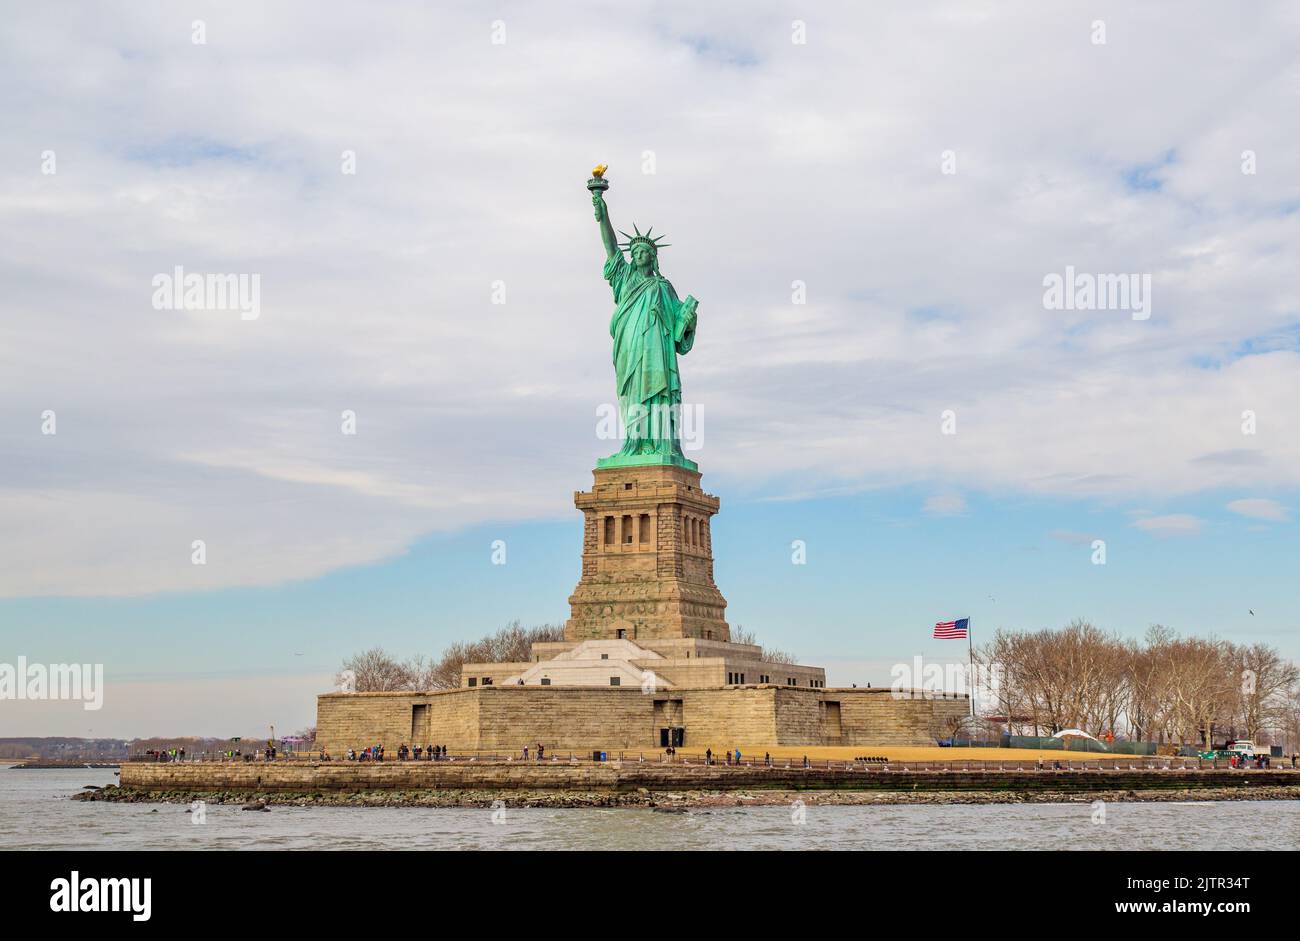 The Statue of Liberty, Liberty Island, New York Harbour, USA. Stock Photo